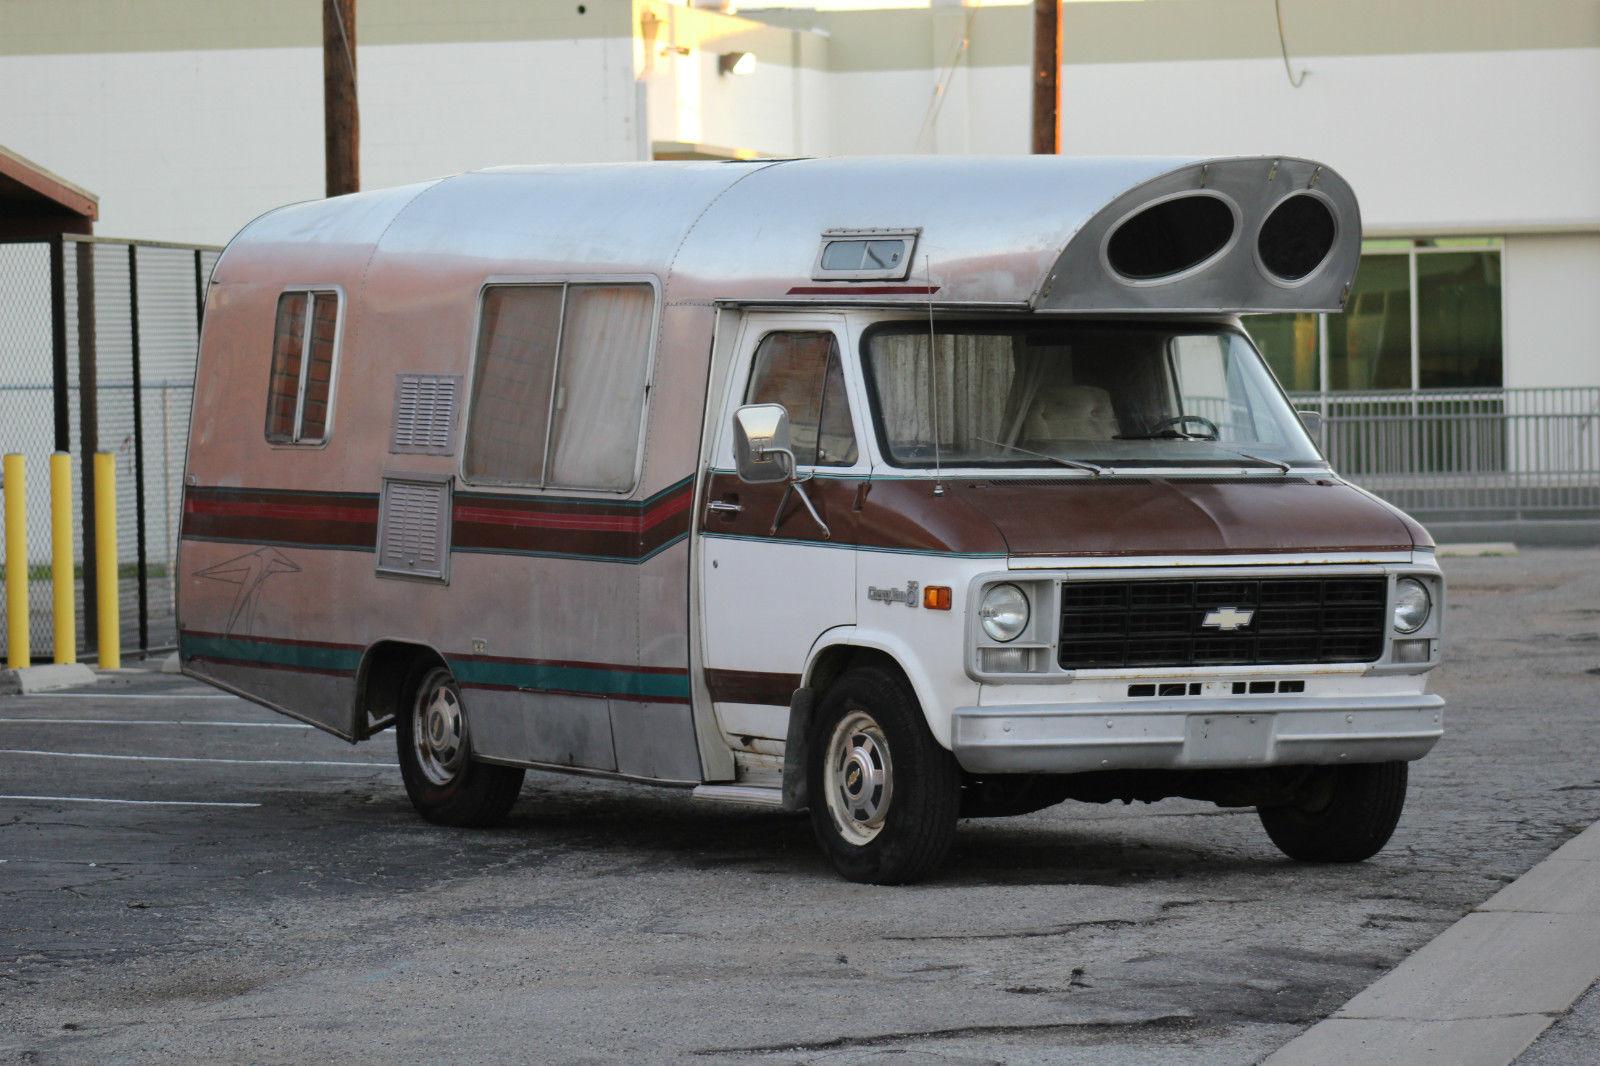 1978 Chevy Camper Van for sale